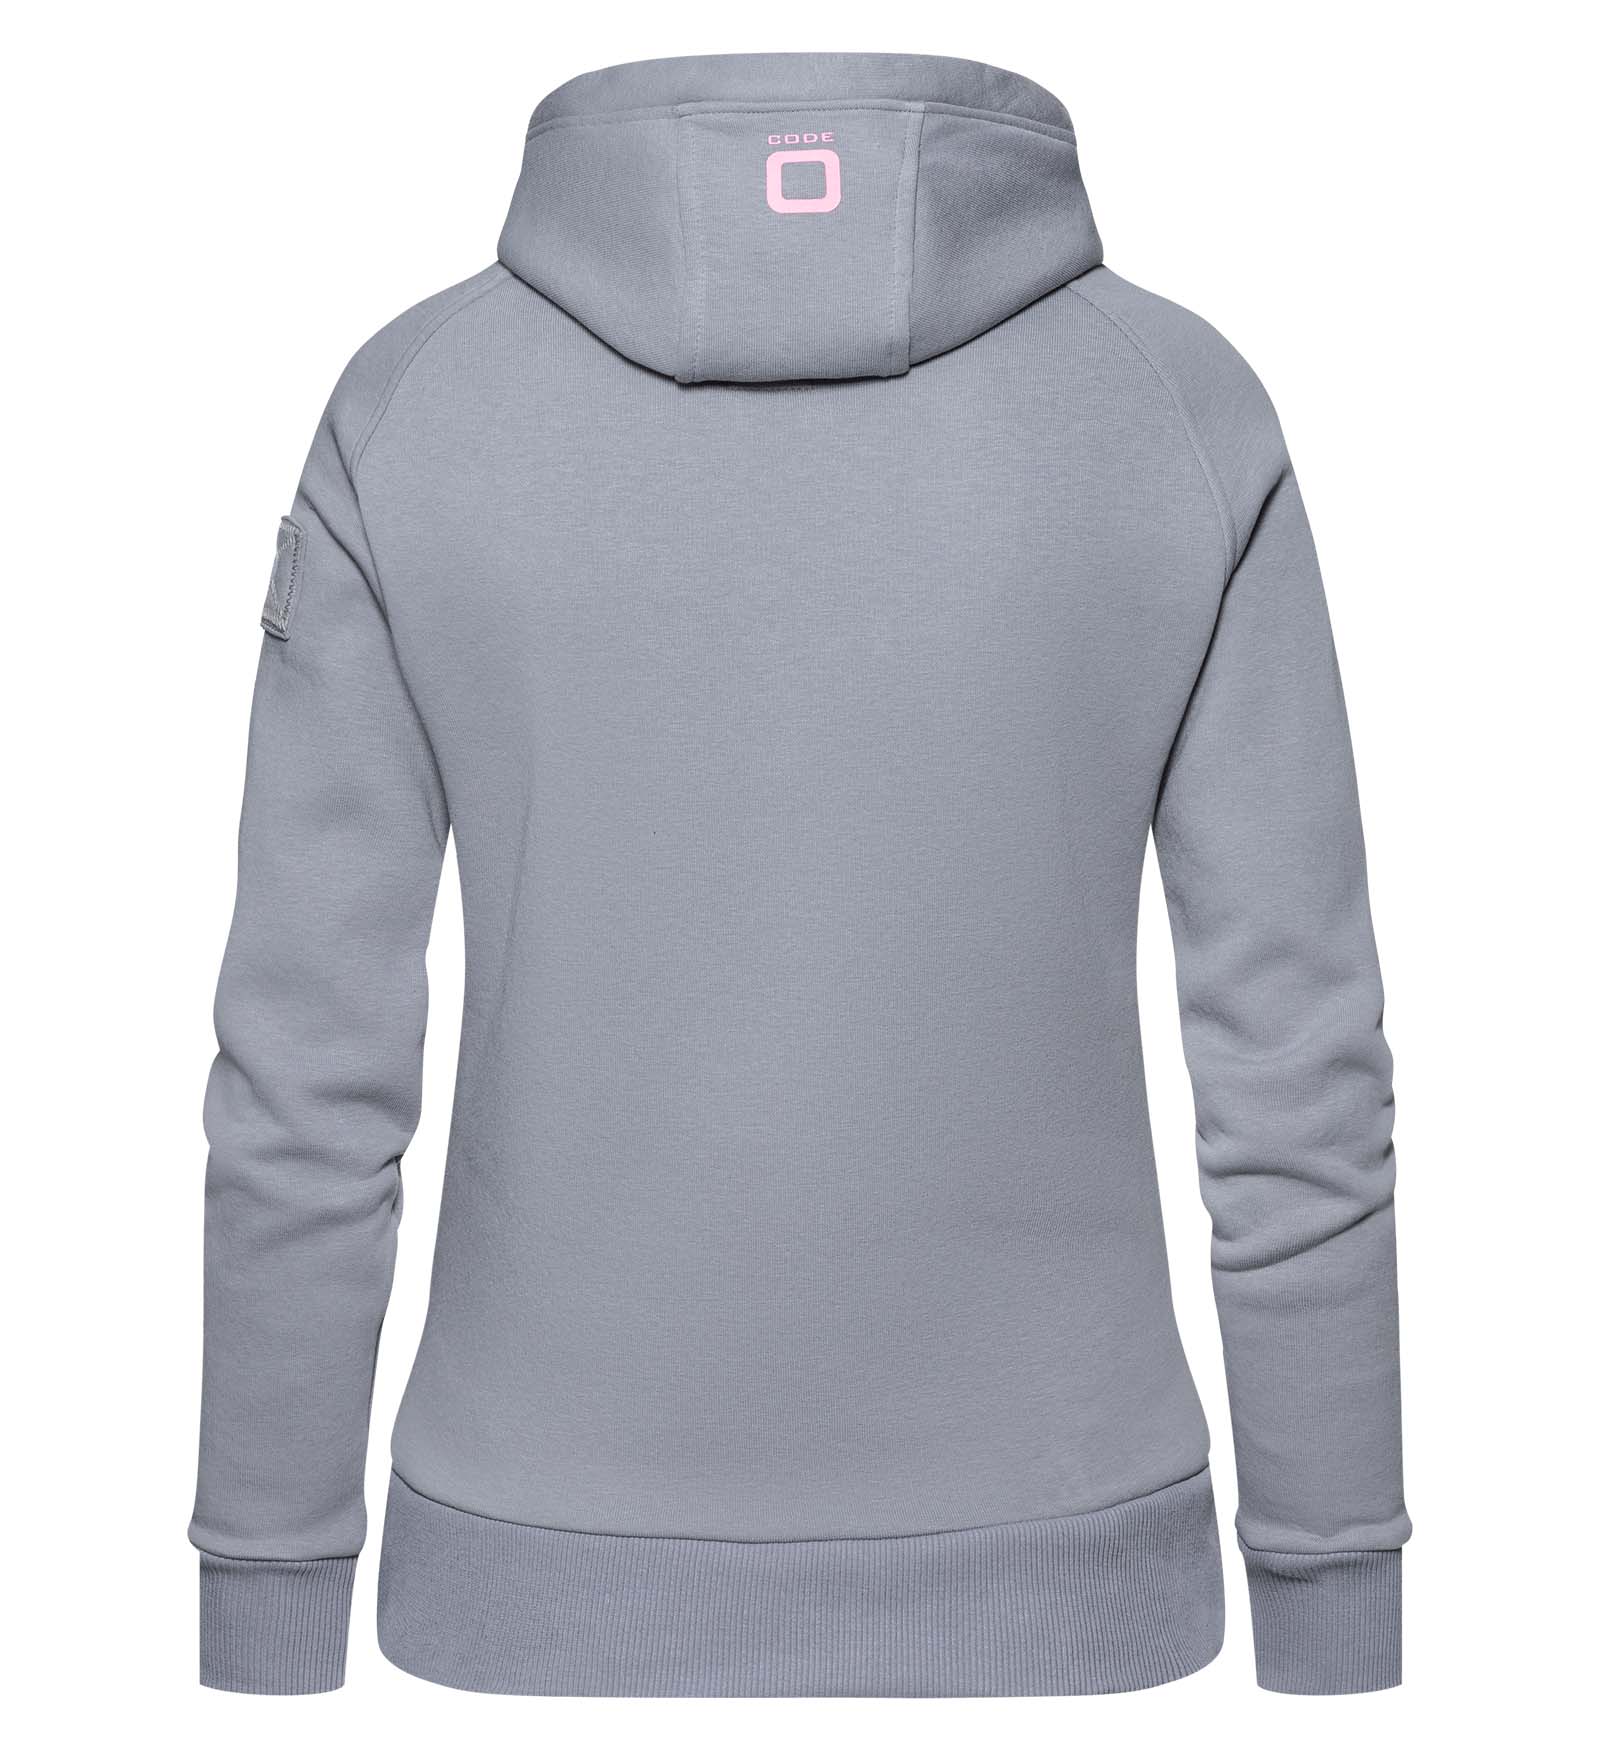 Hoodie for women in grey